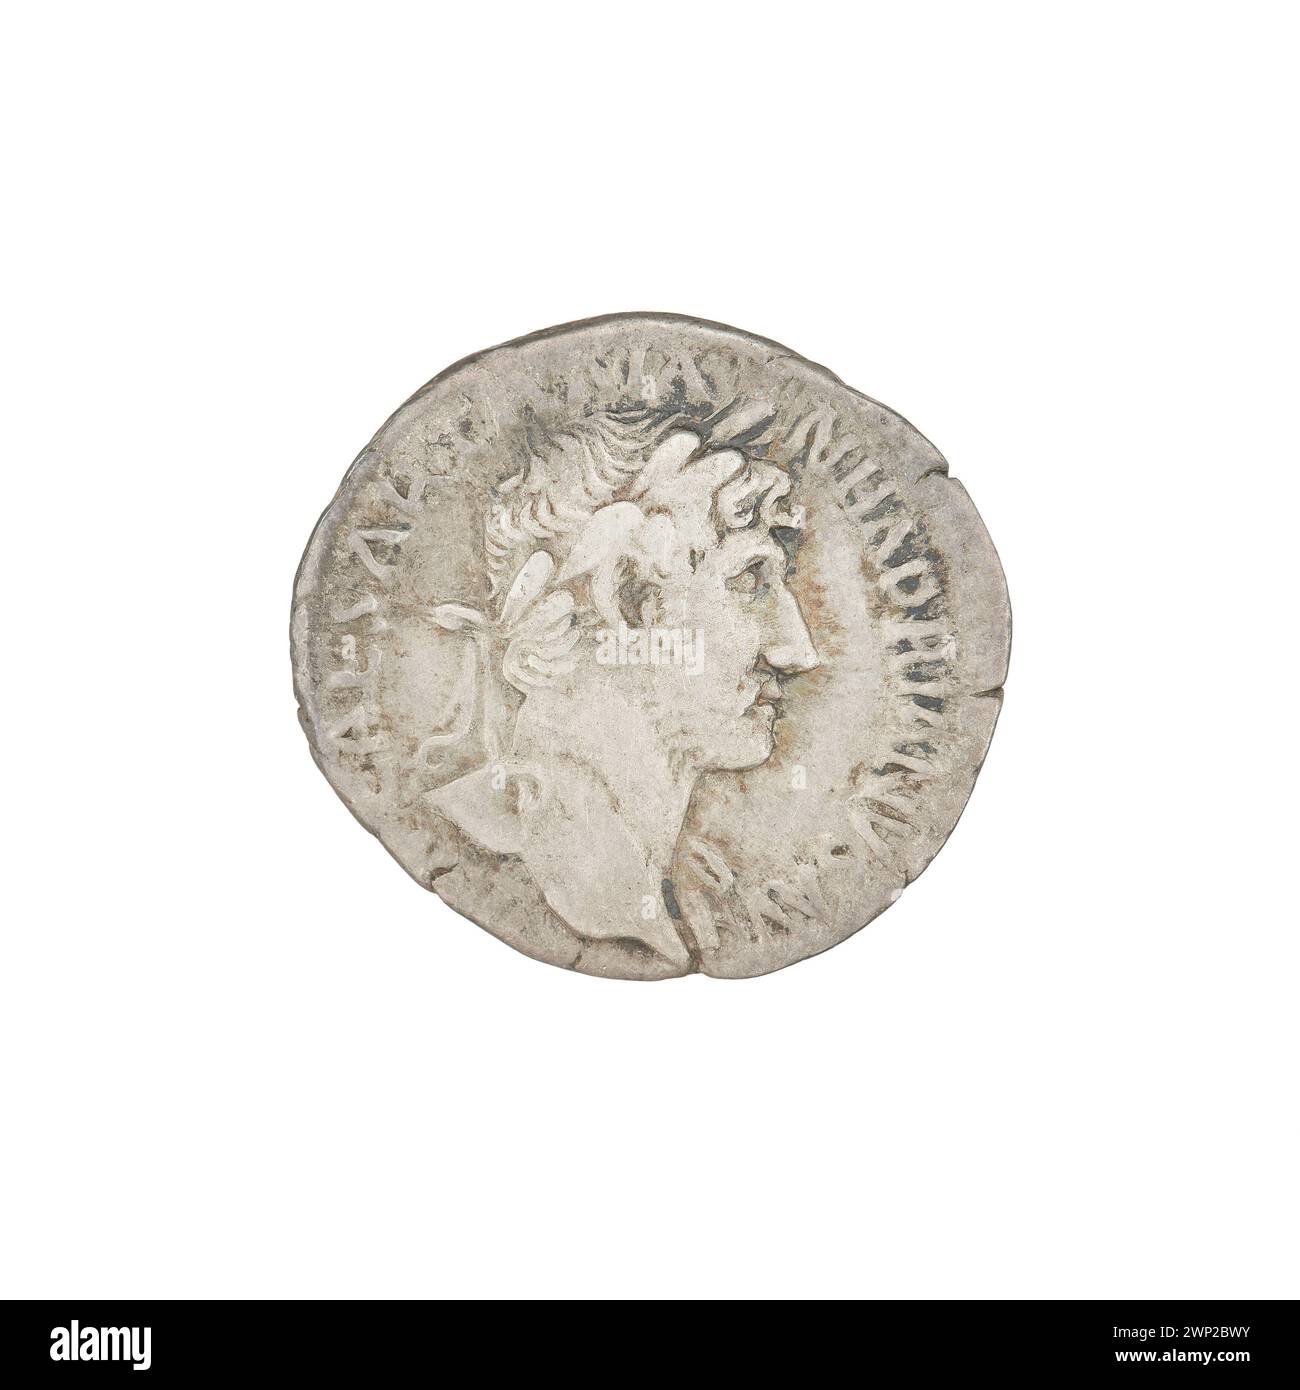 denarius; Hadrian (76-138; Roman emperor 117-138); 119-122 (119-00-00-122-00-00);Pudicitia (personification), bust, hands, laurel wreaths Stock Photo